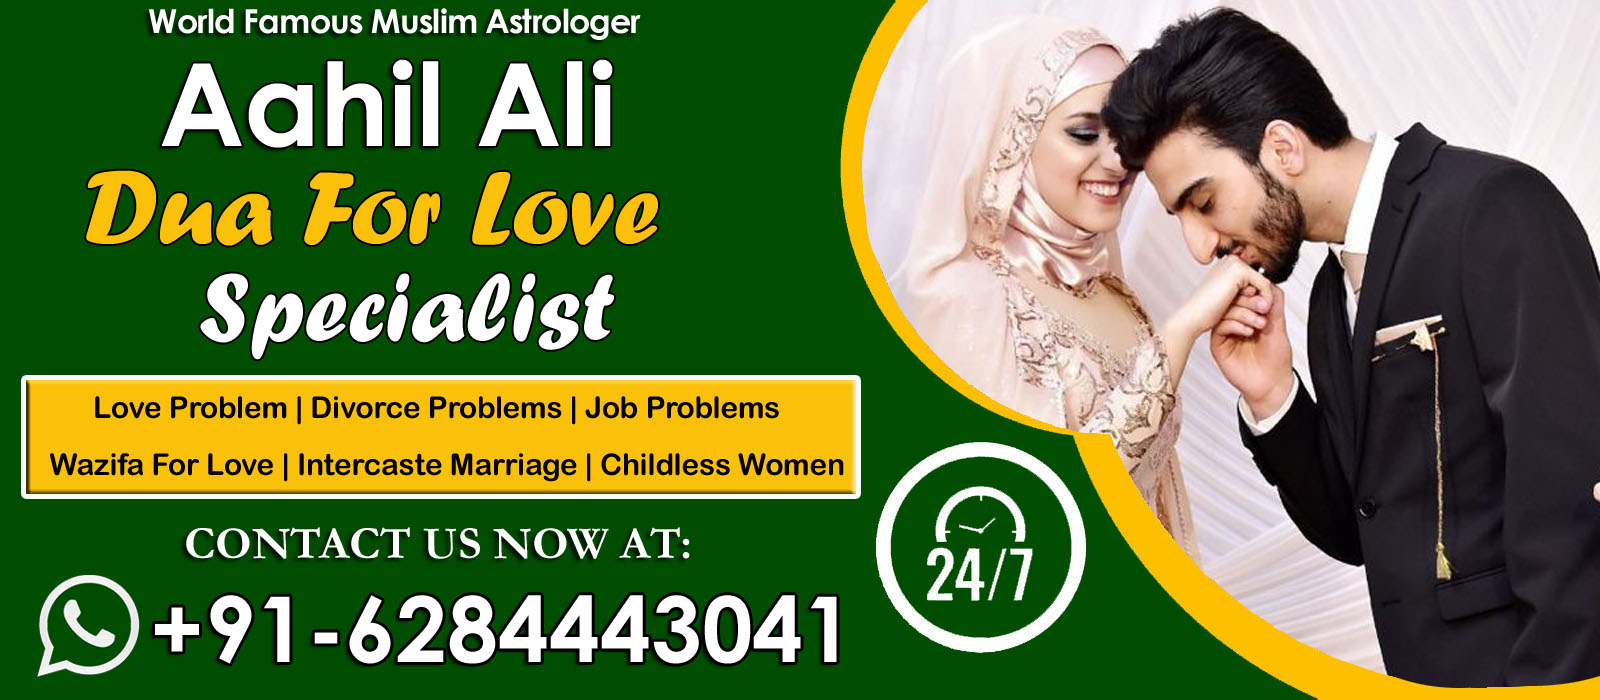 World Famous Astrologer Aahil Ali Ji +91-6284443041 